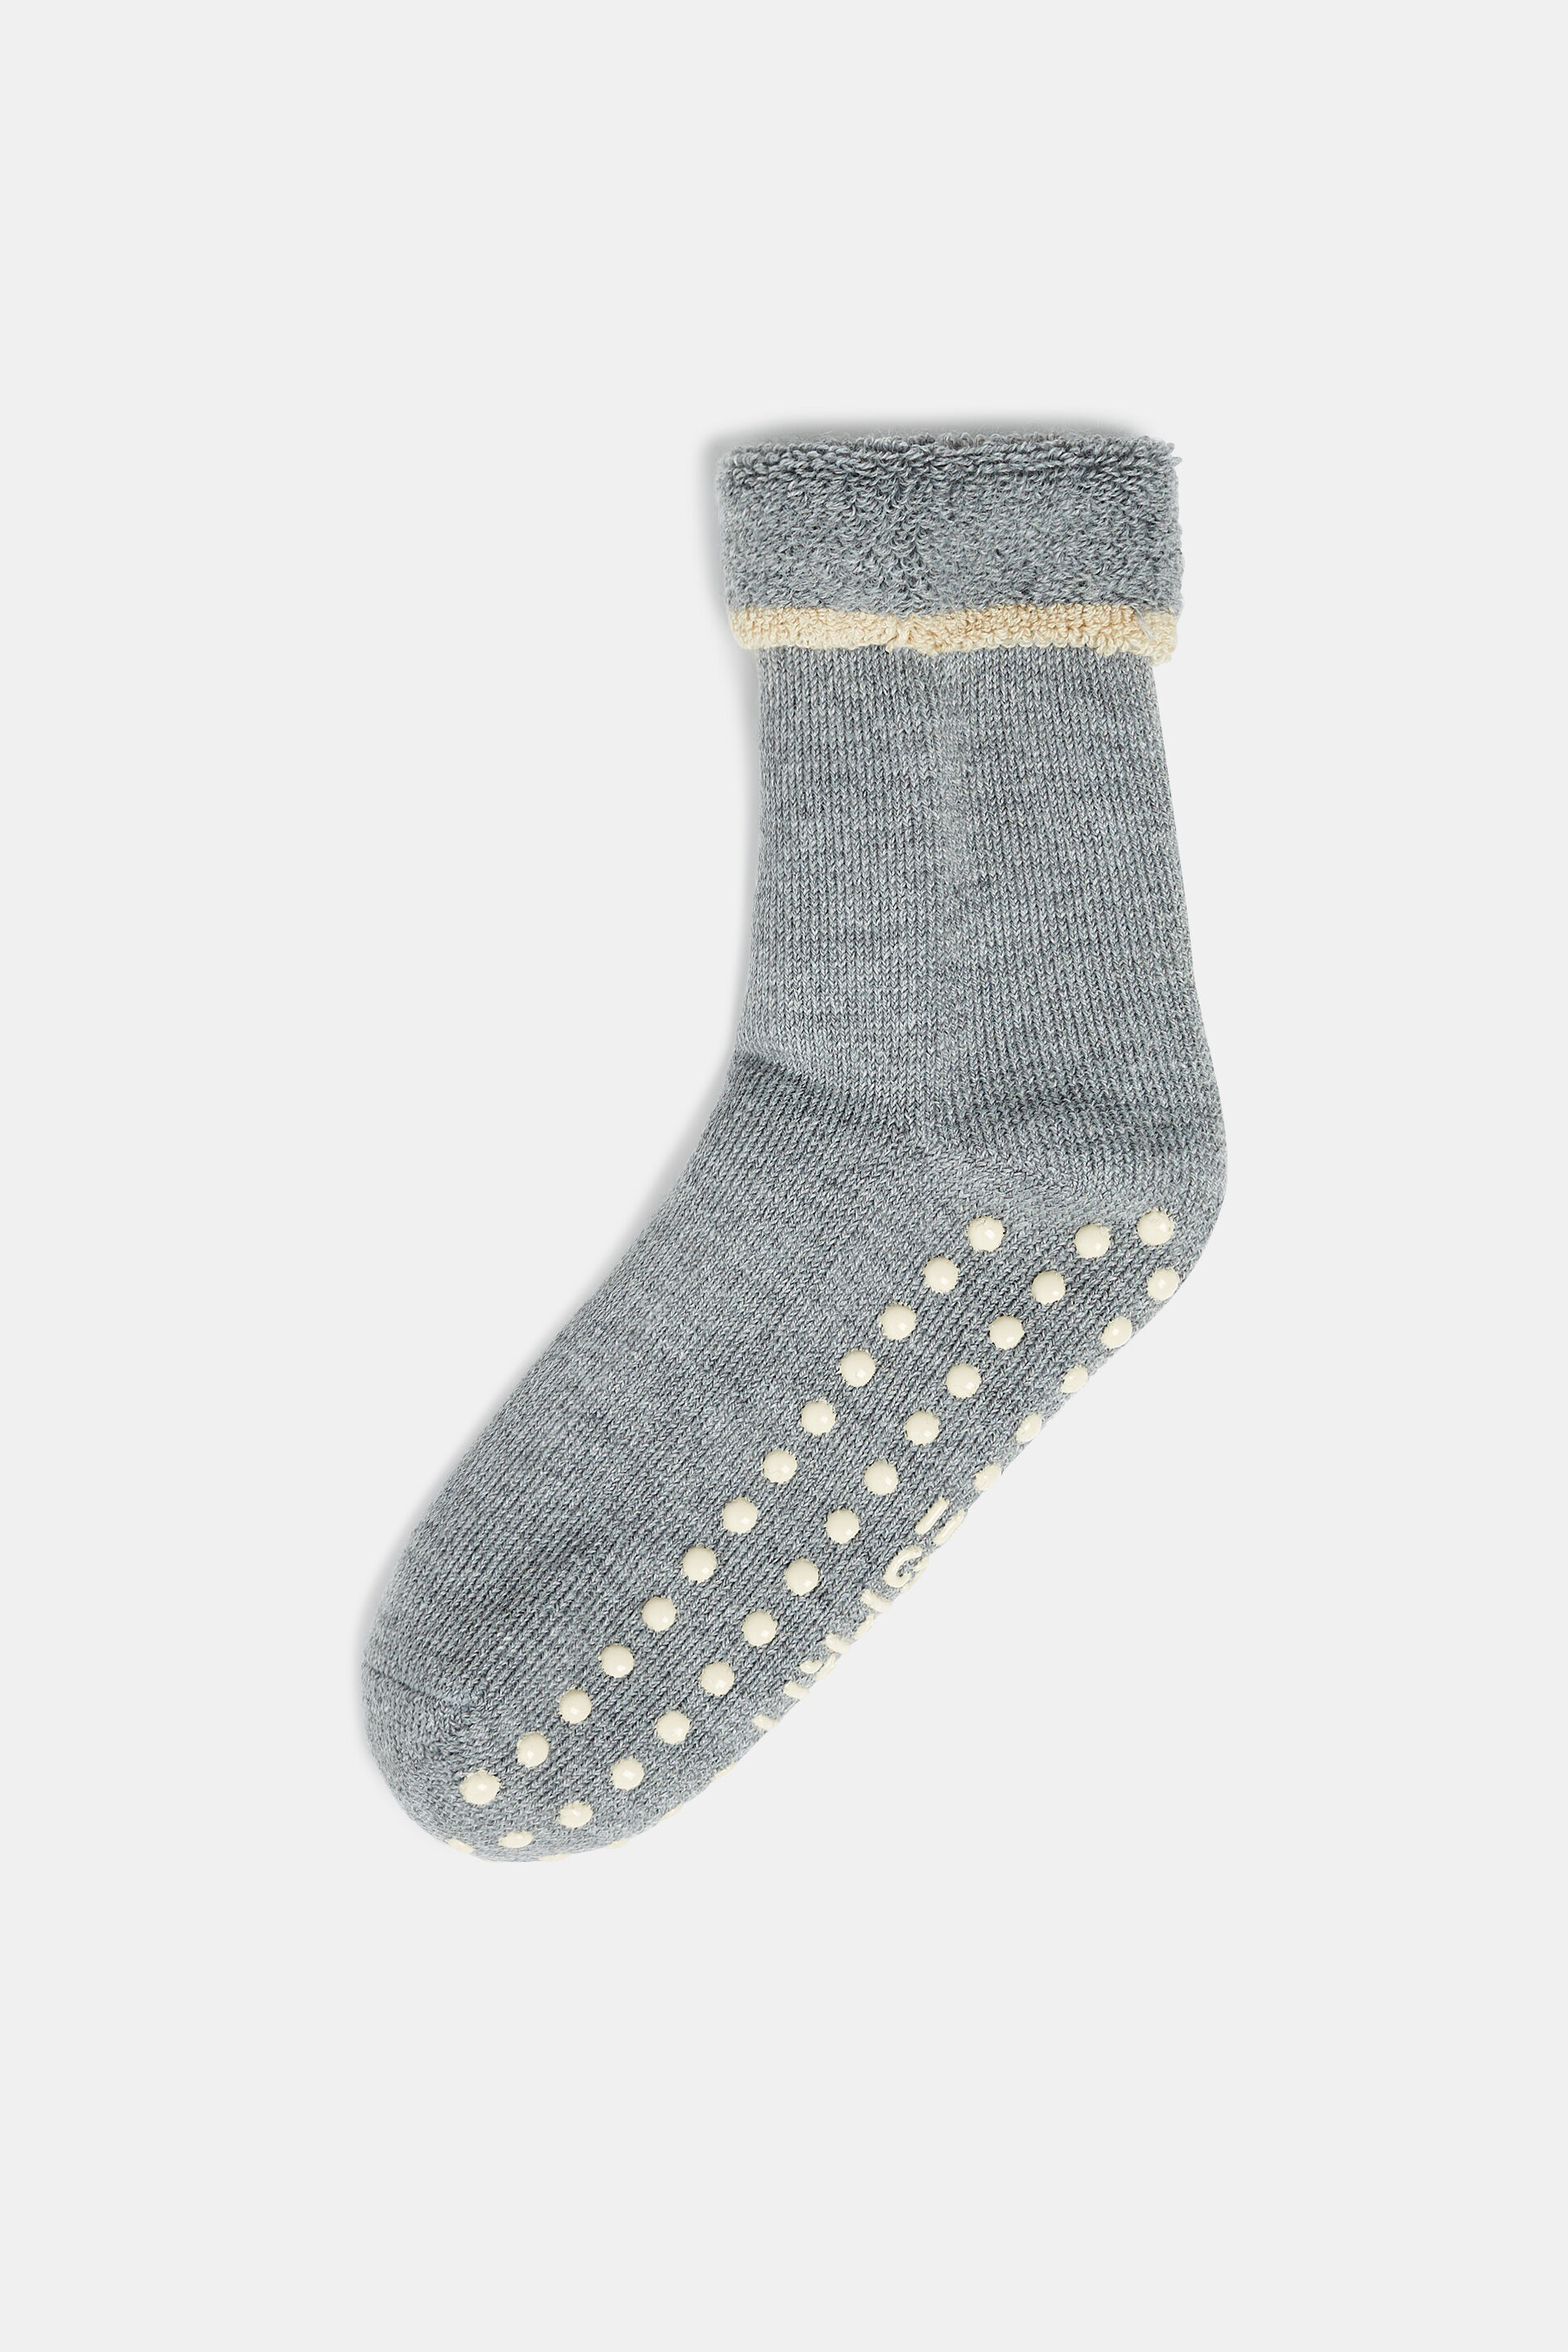 Esprit Soft blend stopper wool socks,